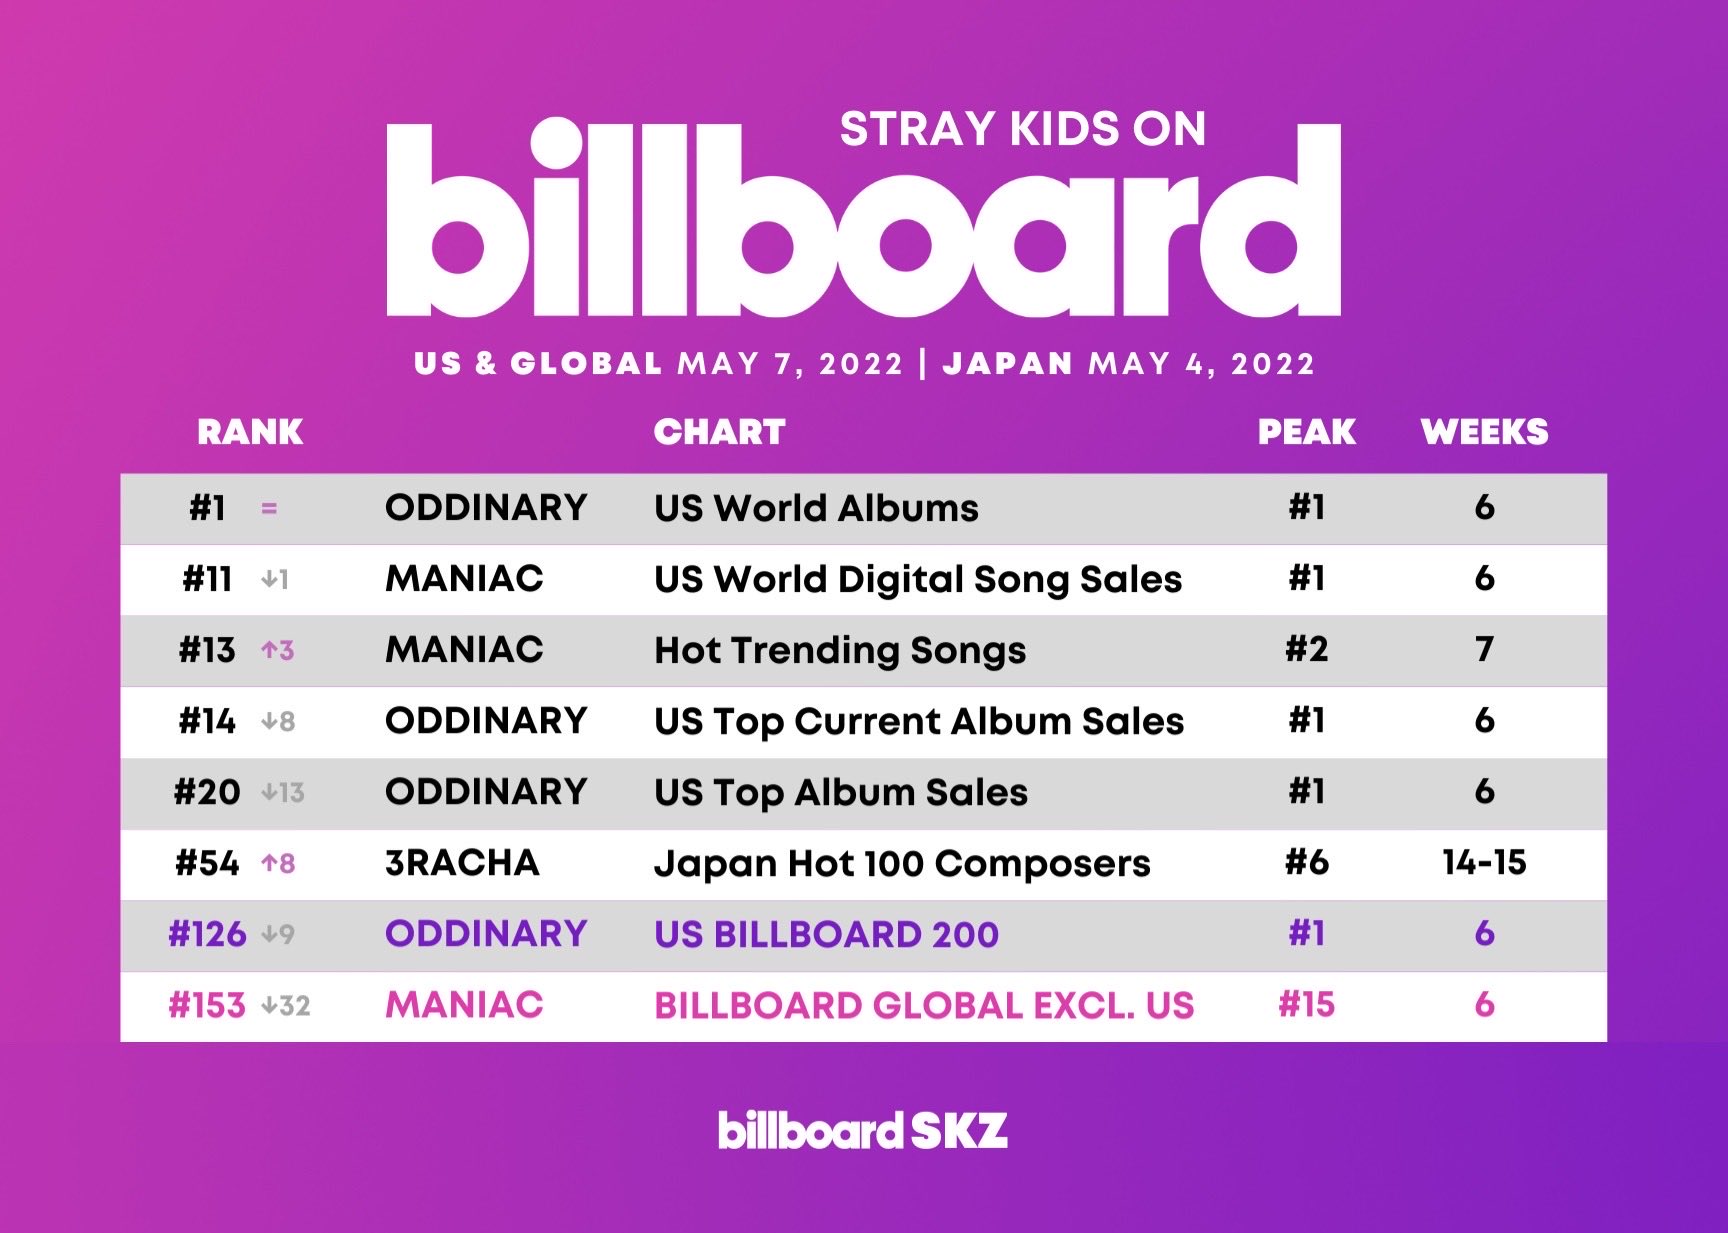 billboard SKZ on Twitter: "#StrayKids￼on Billboard charts this week (dated  May 7, 2022) @Stray_Kids @Stray_Kids_JP #스트레이키즈￼#スキズ #MANIAC_SKZ￼  https://t.co/6TBh5daXSr" / Twitter